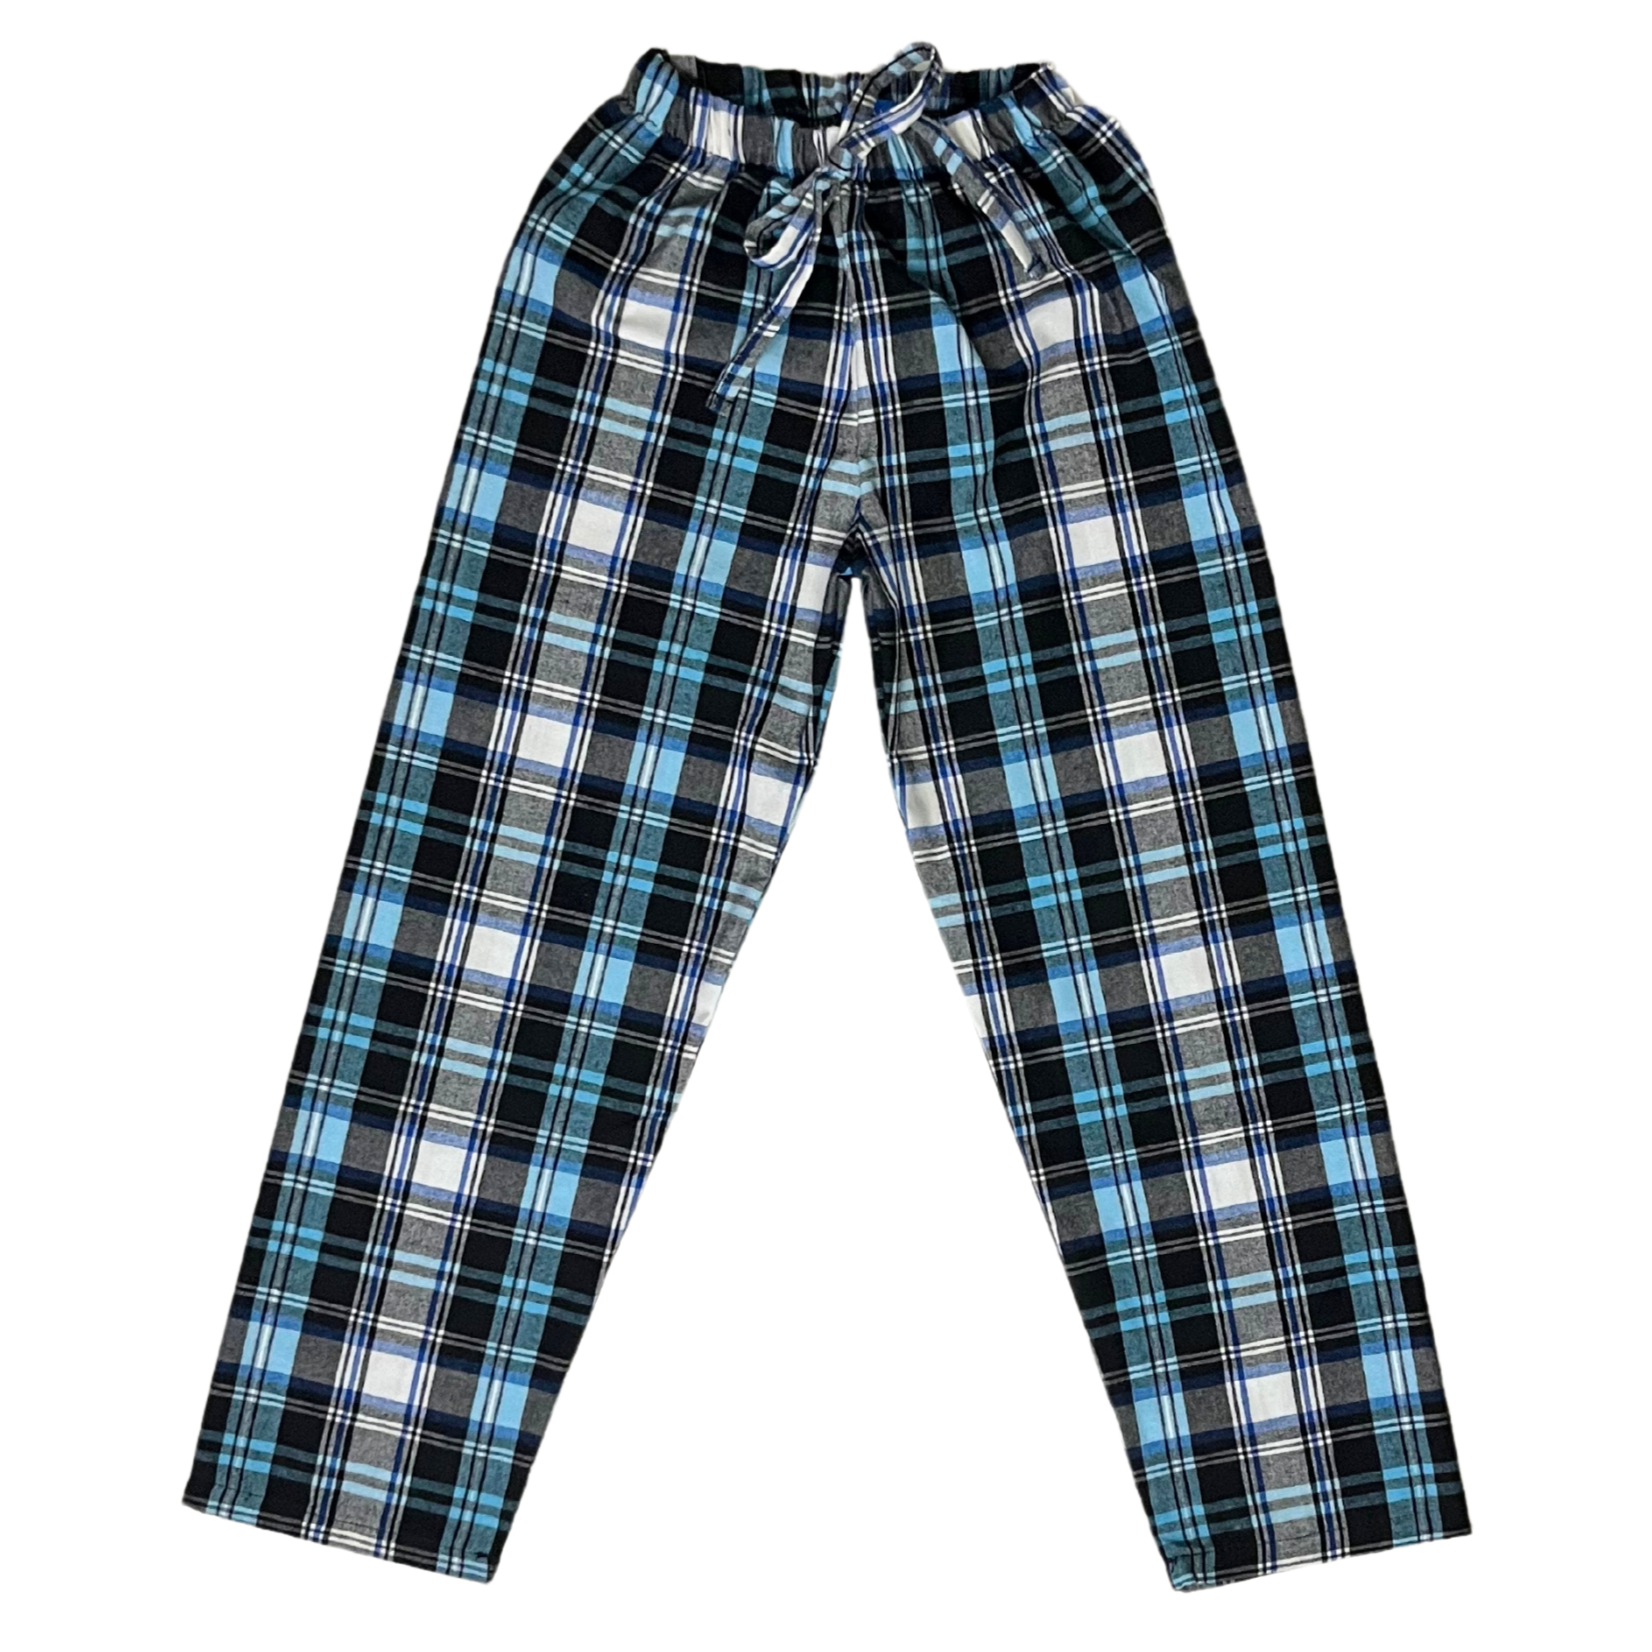 Pantalon de Pijama Negro/Celeste/Azul Unisex Niños 10013